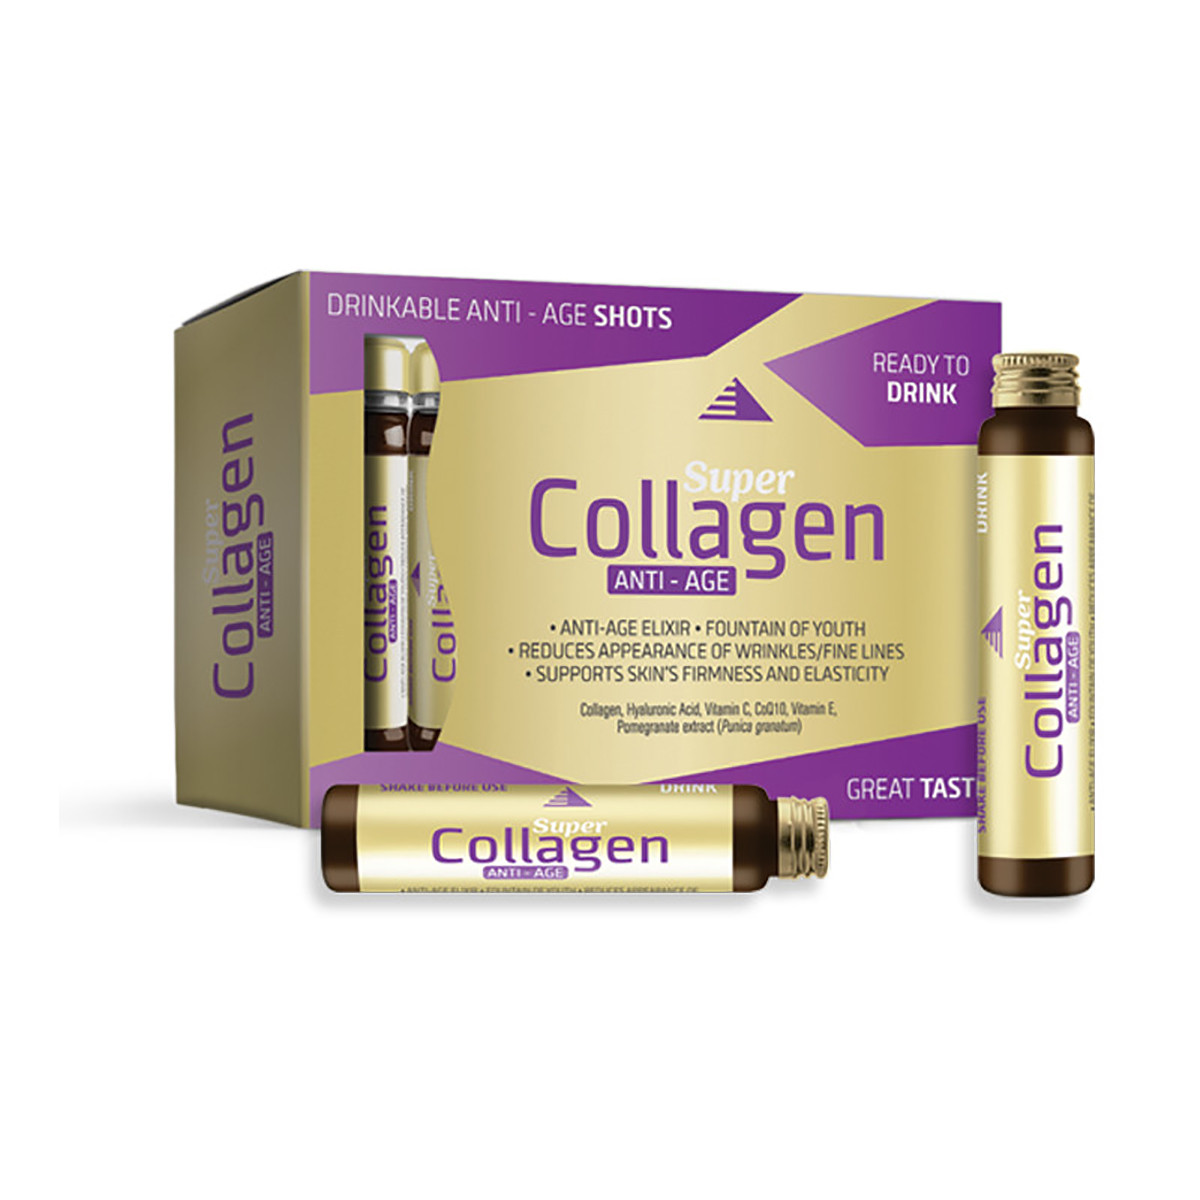 Super Collagen Anti-age shots 14 x 25ml 